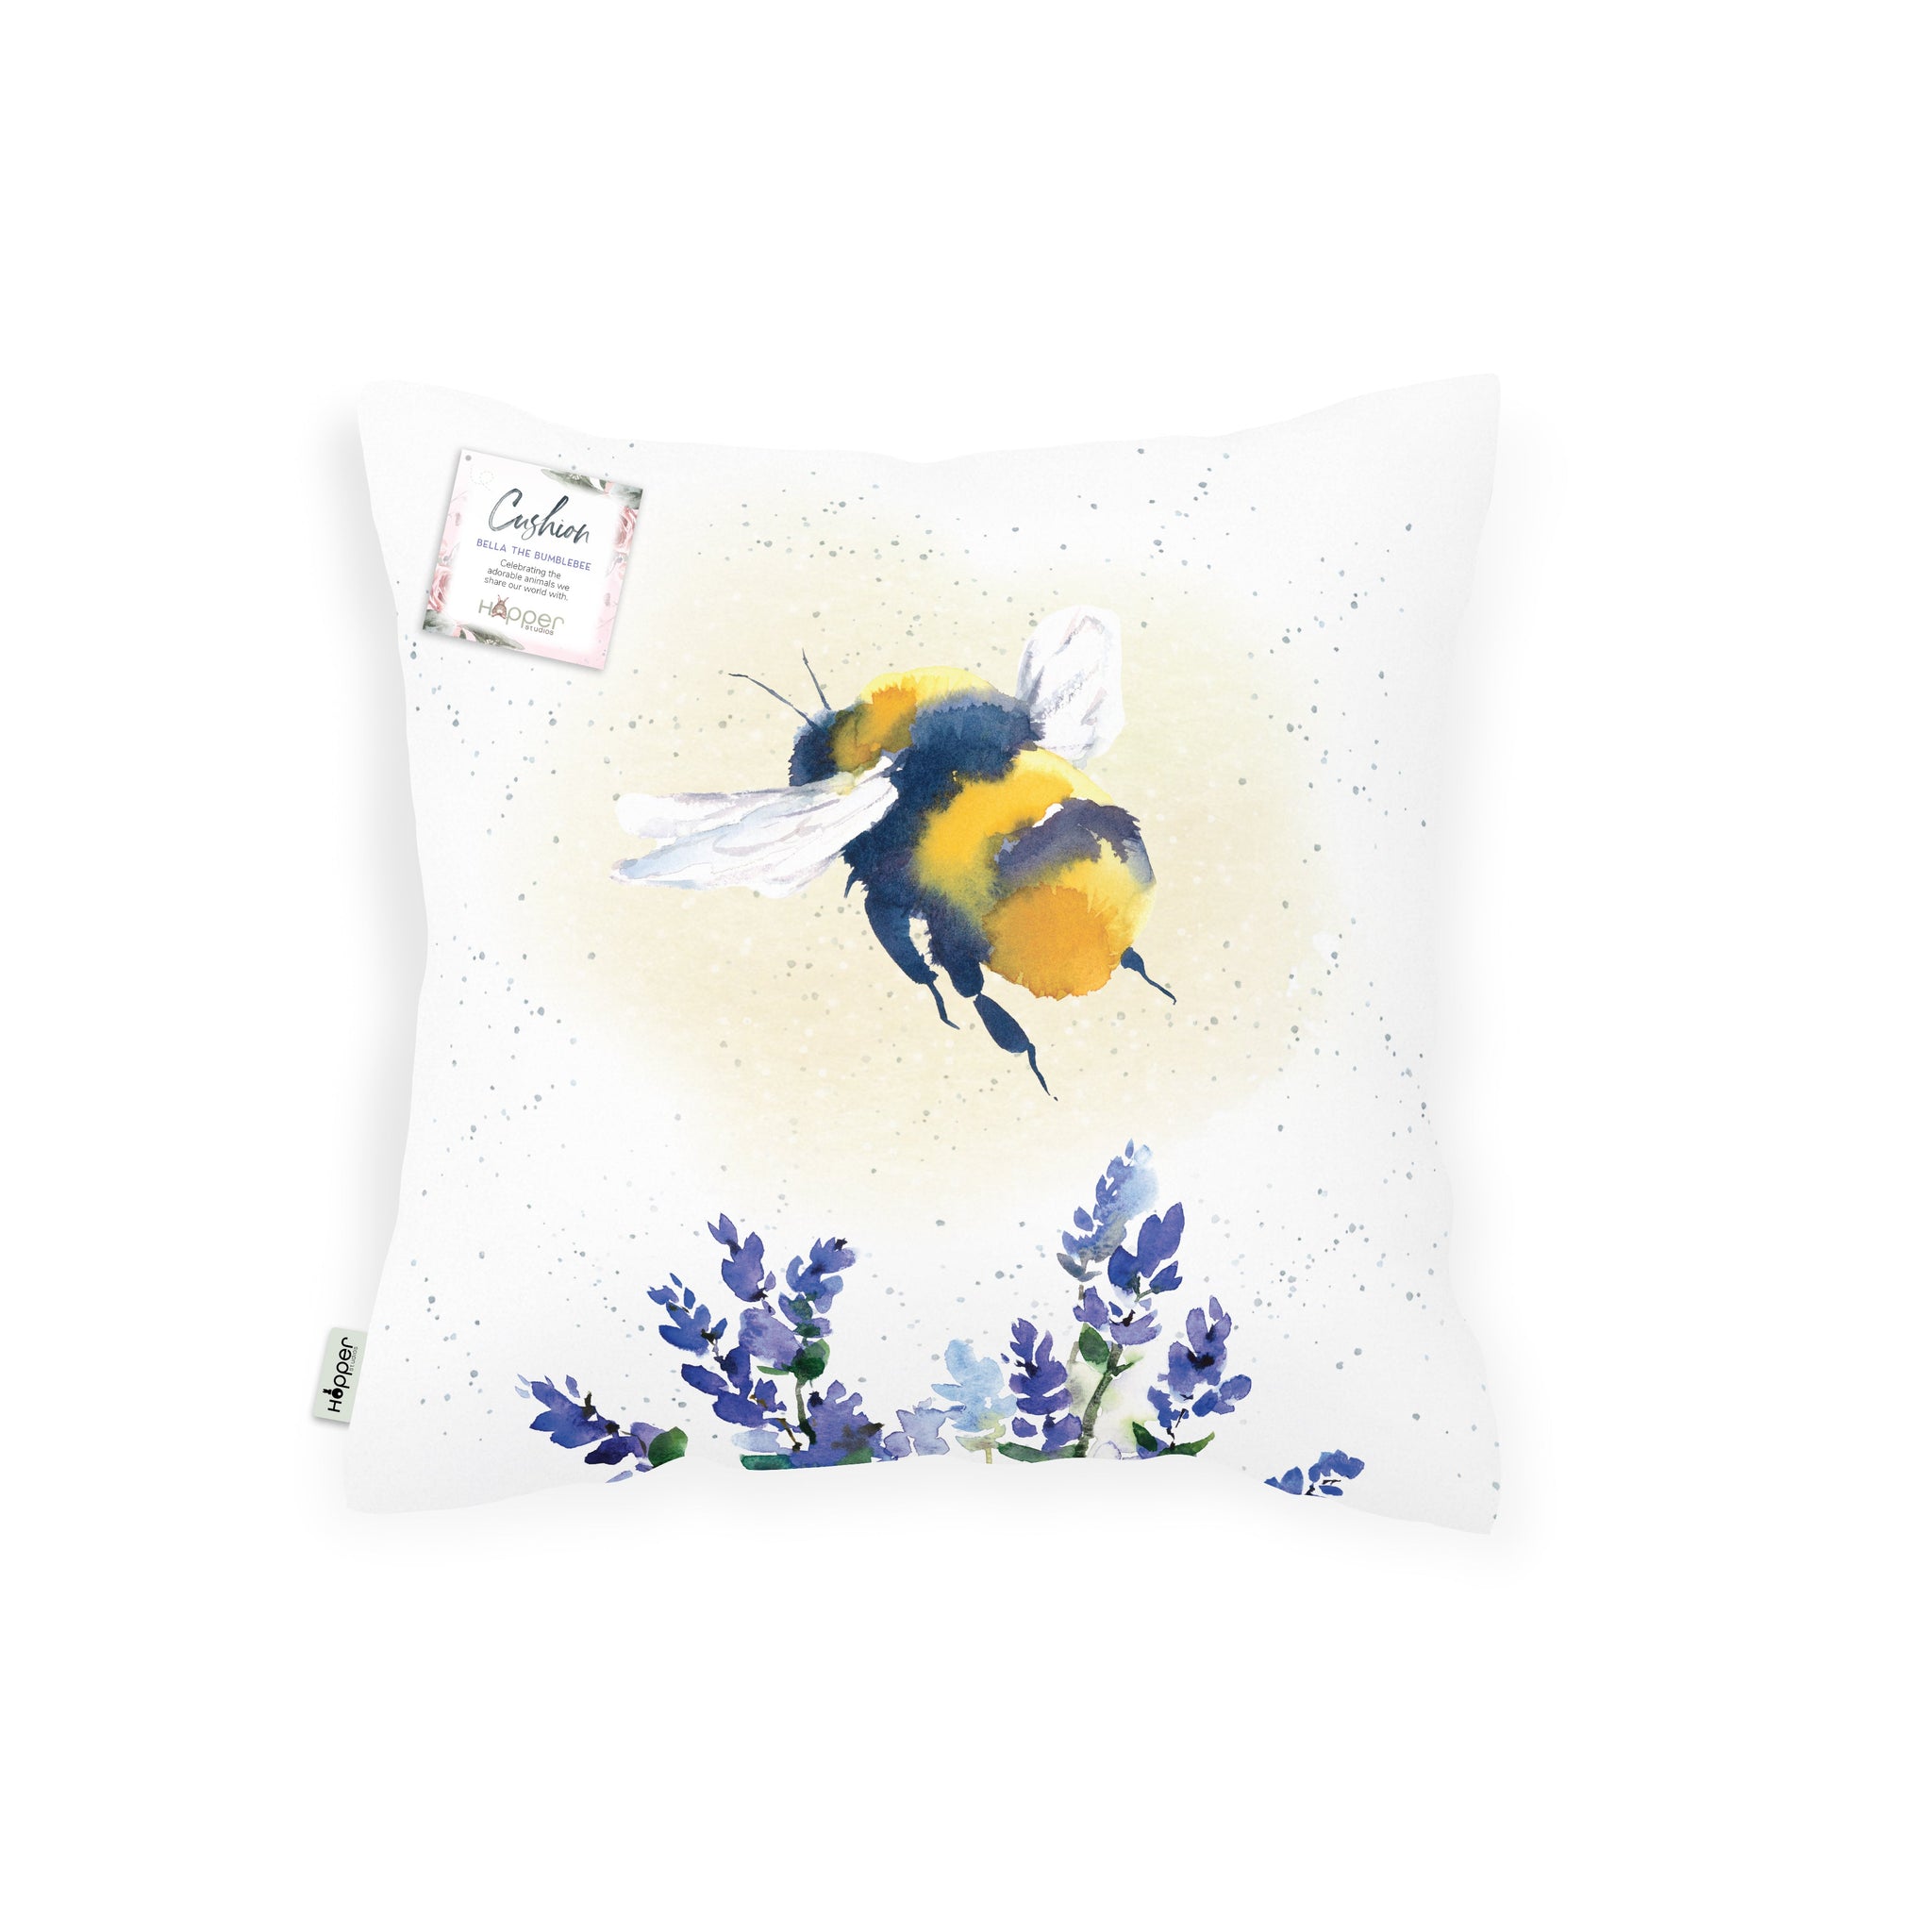 Hopper Studios Cushion - Bella the Bumblebee